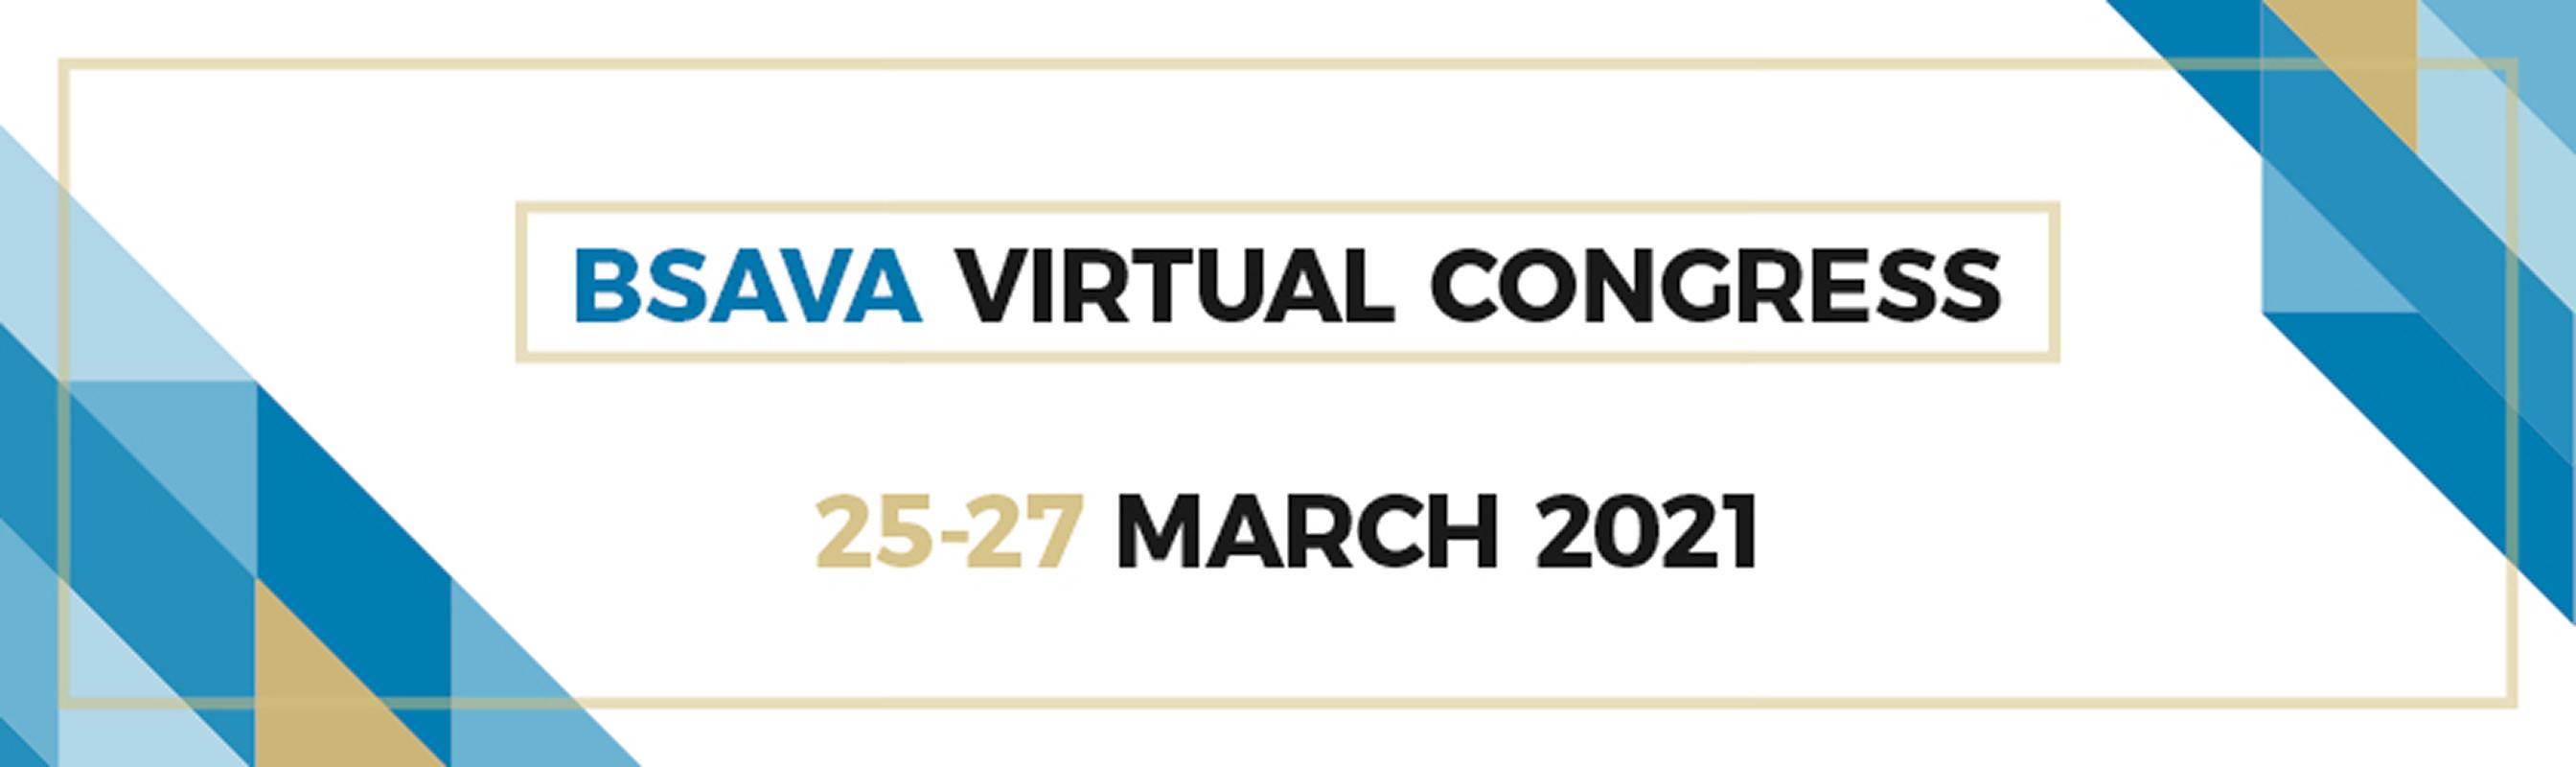 BSAVA Virtual Congress 2021 - March